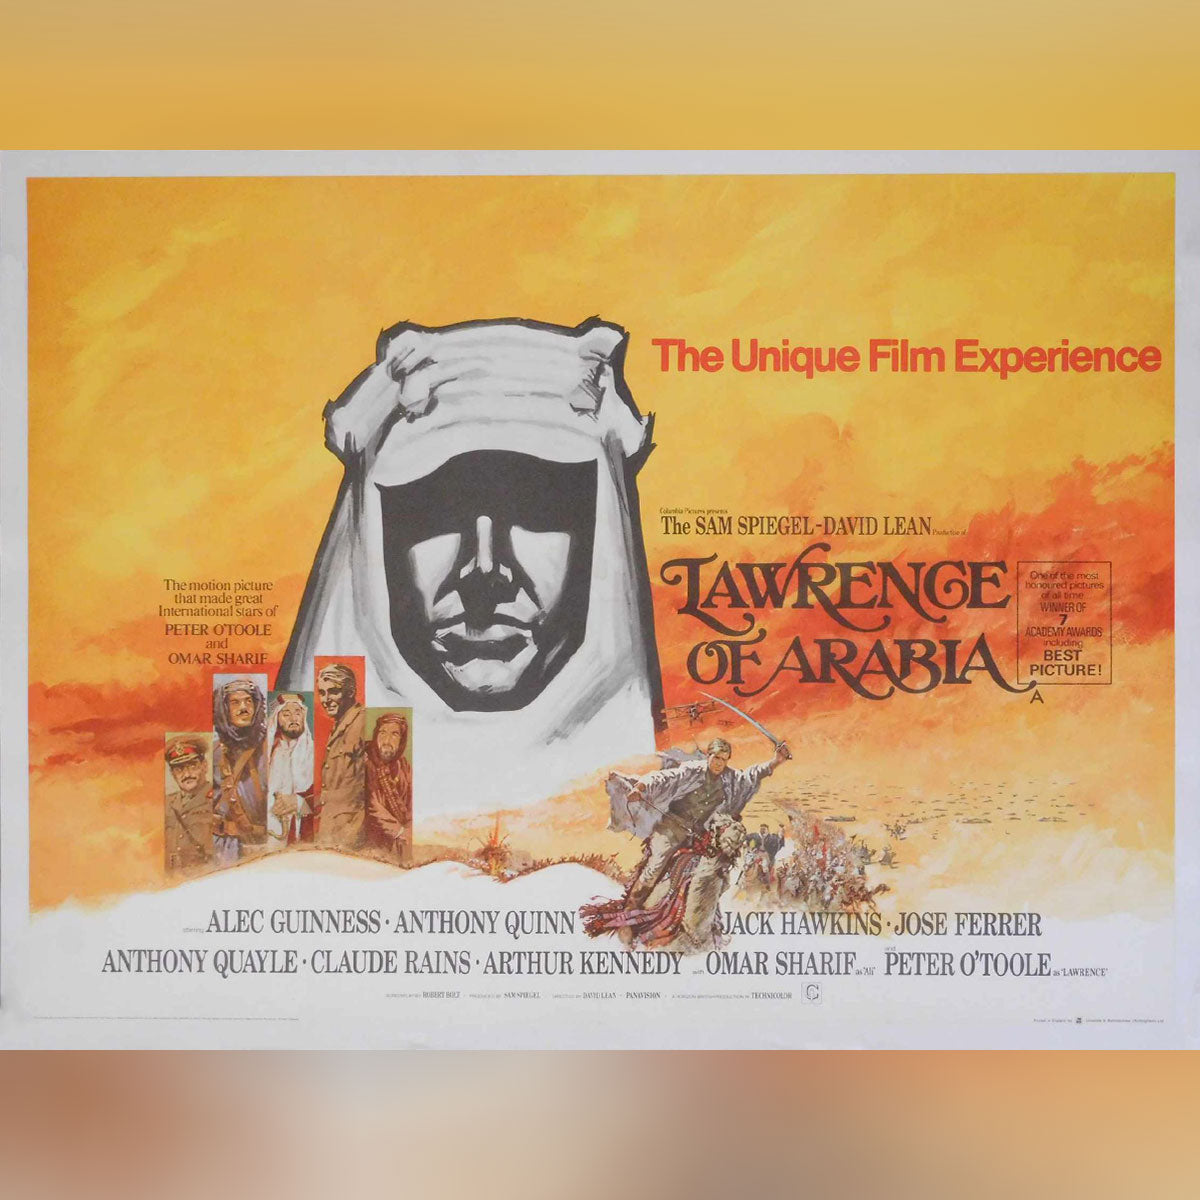 Lawrence of Arabia (1971R)